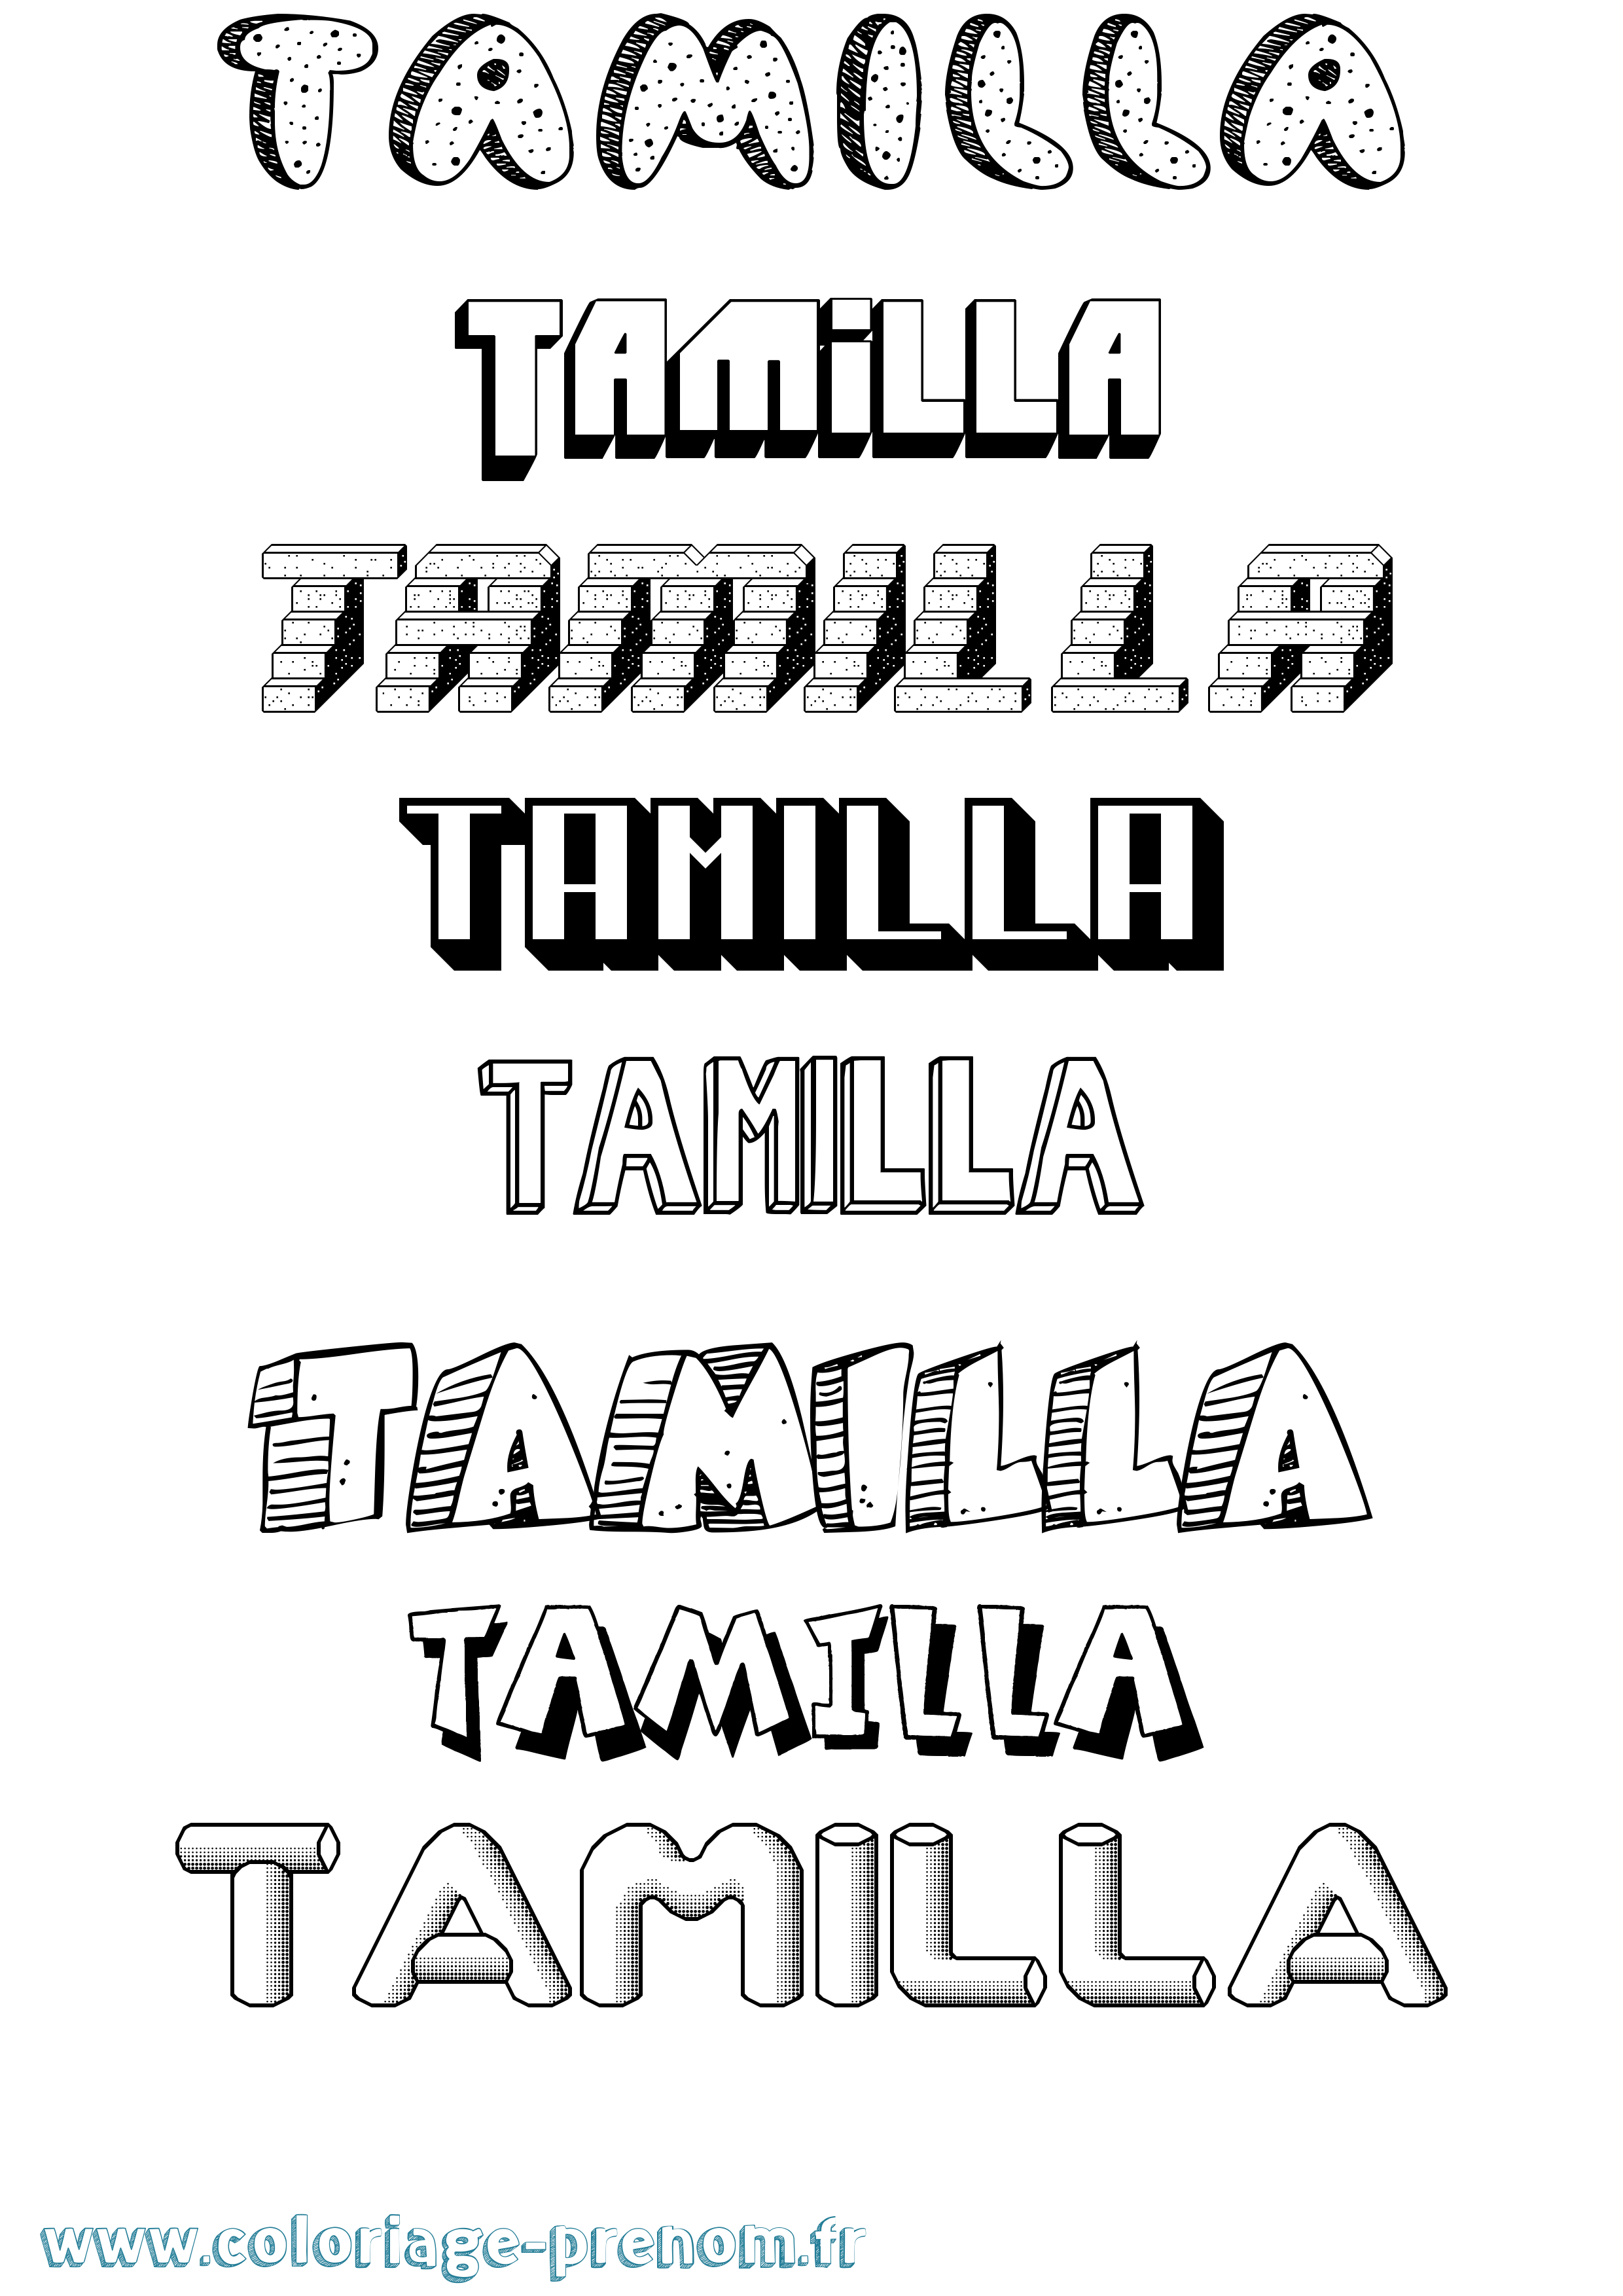 Coloriage prénom Tamilla Effet 3D